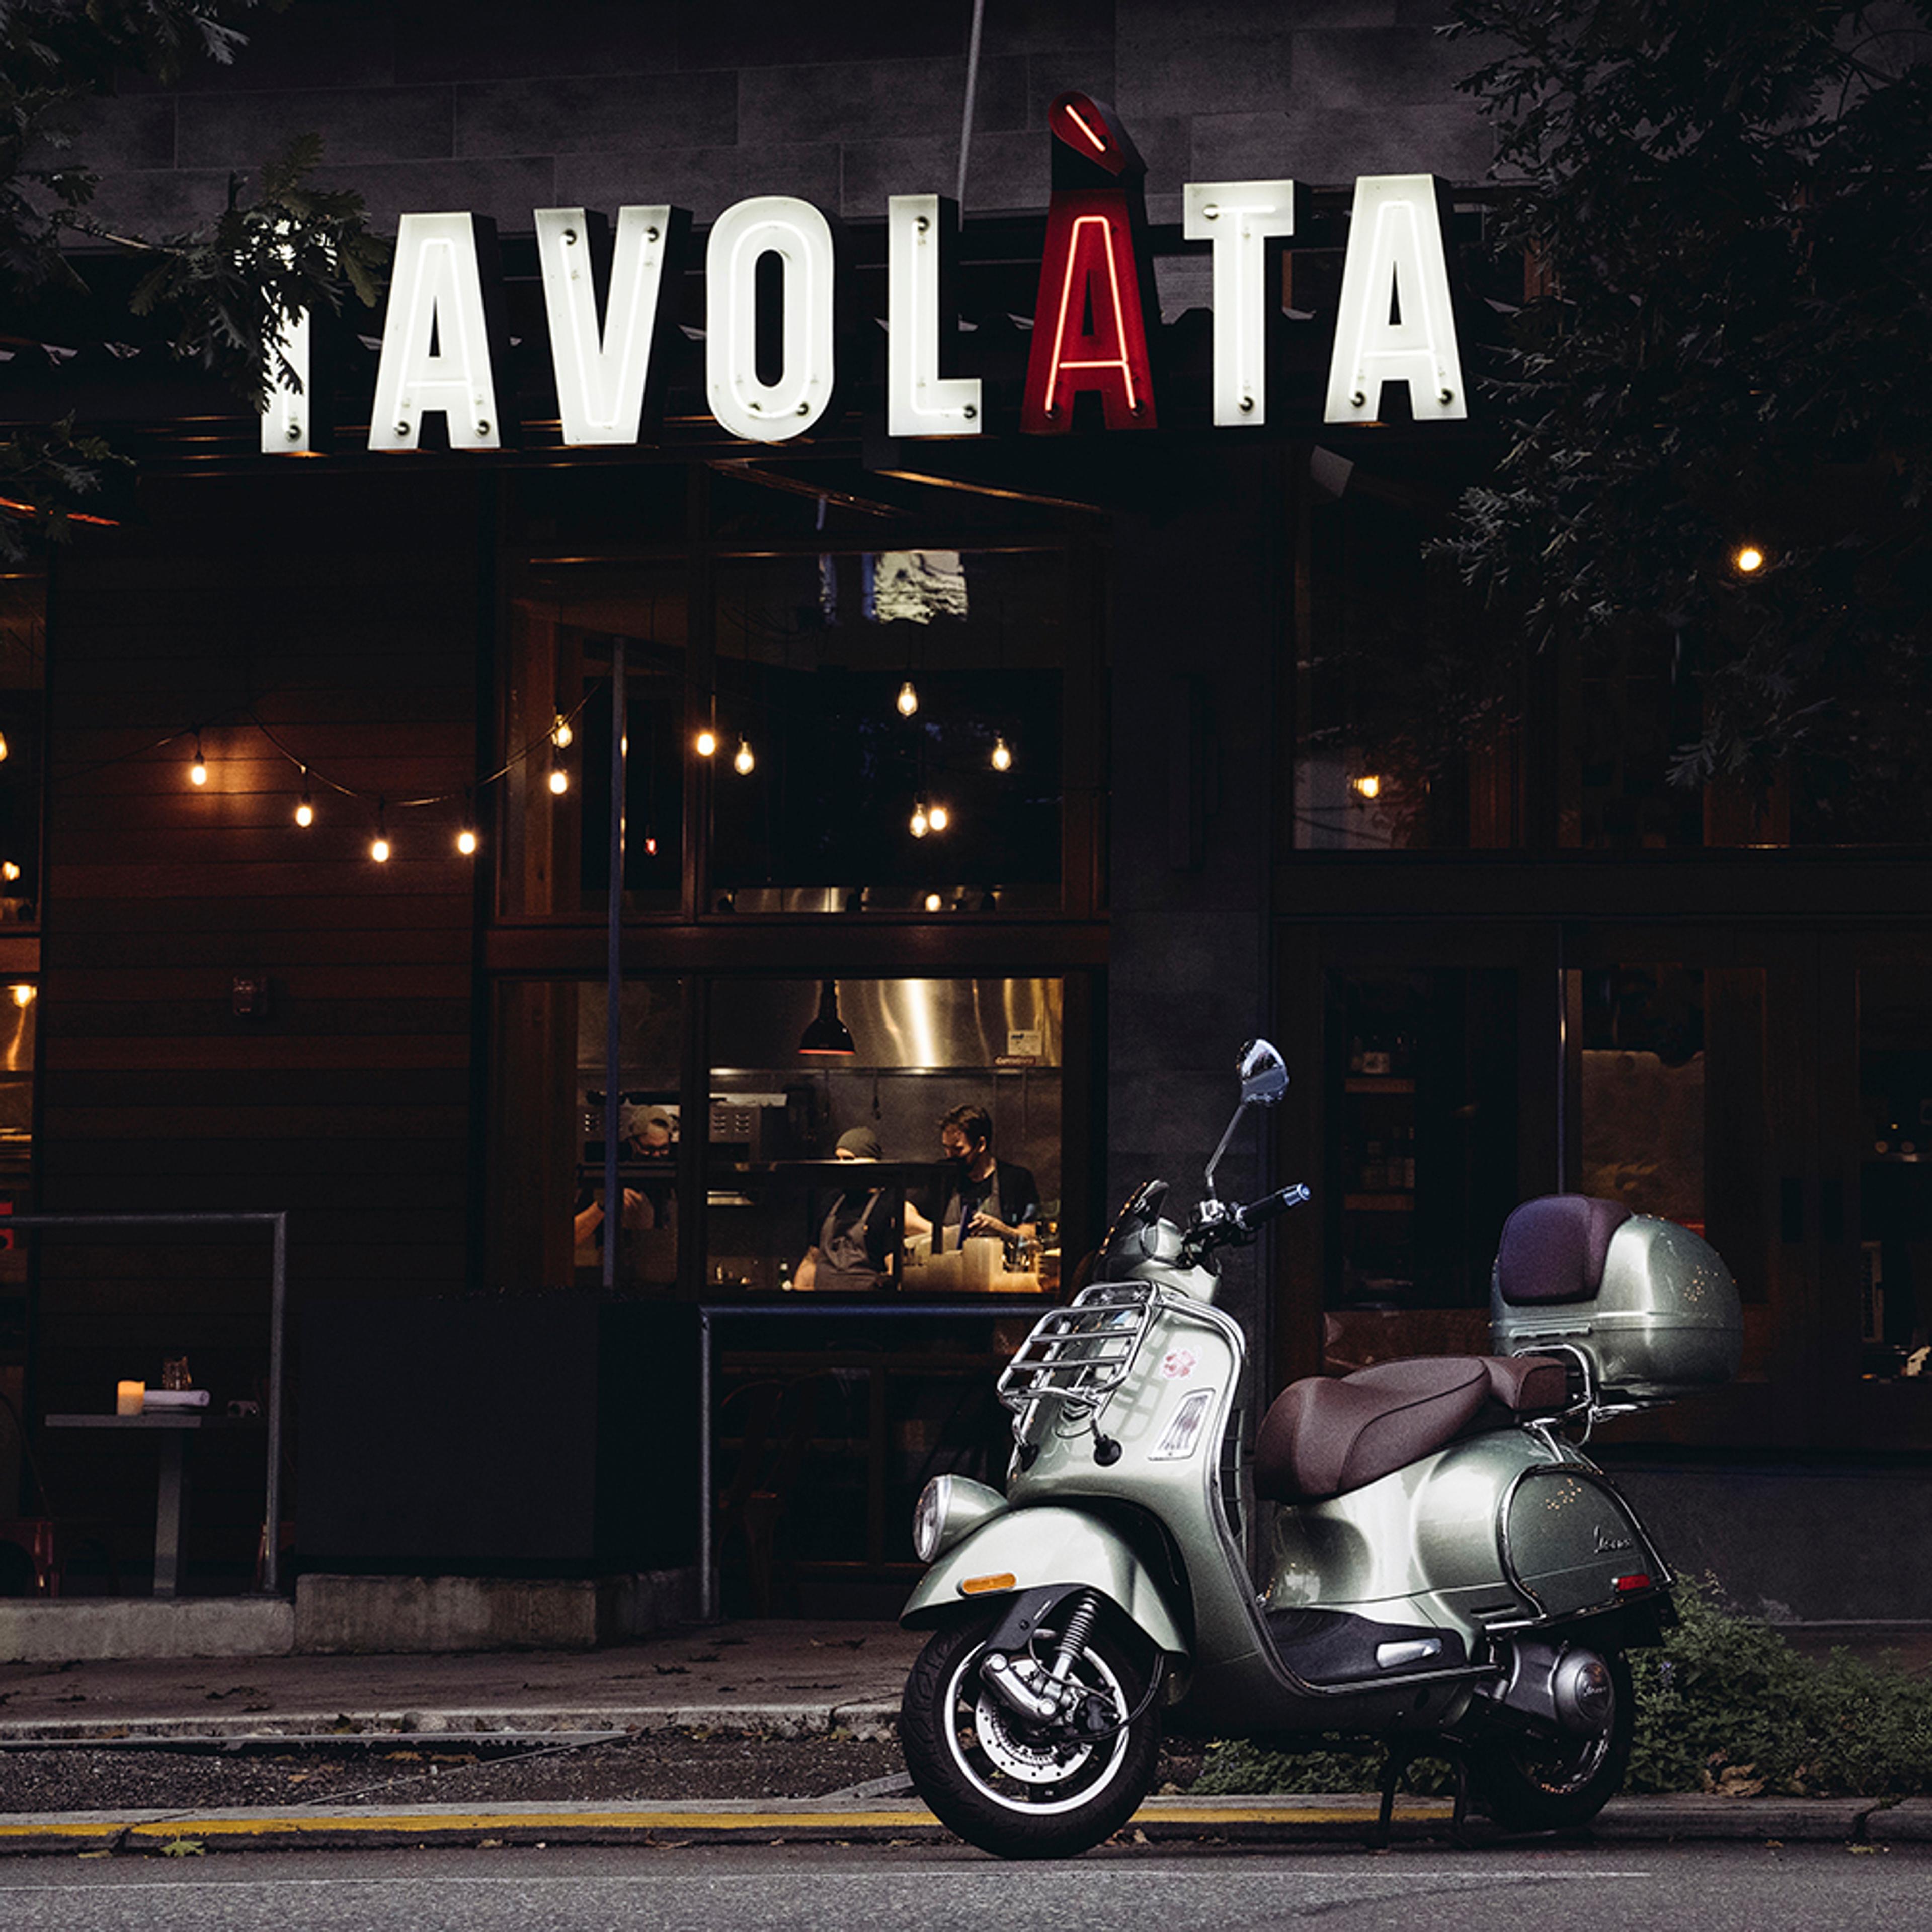 Vespa parked in front of Tavolàta restaurant